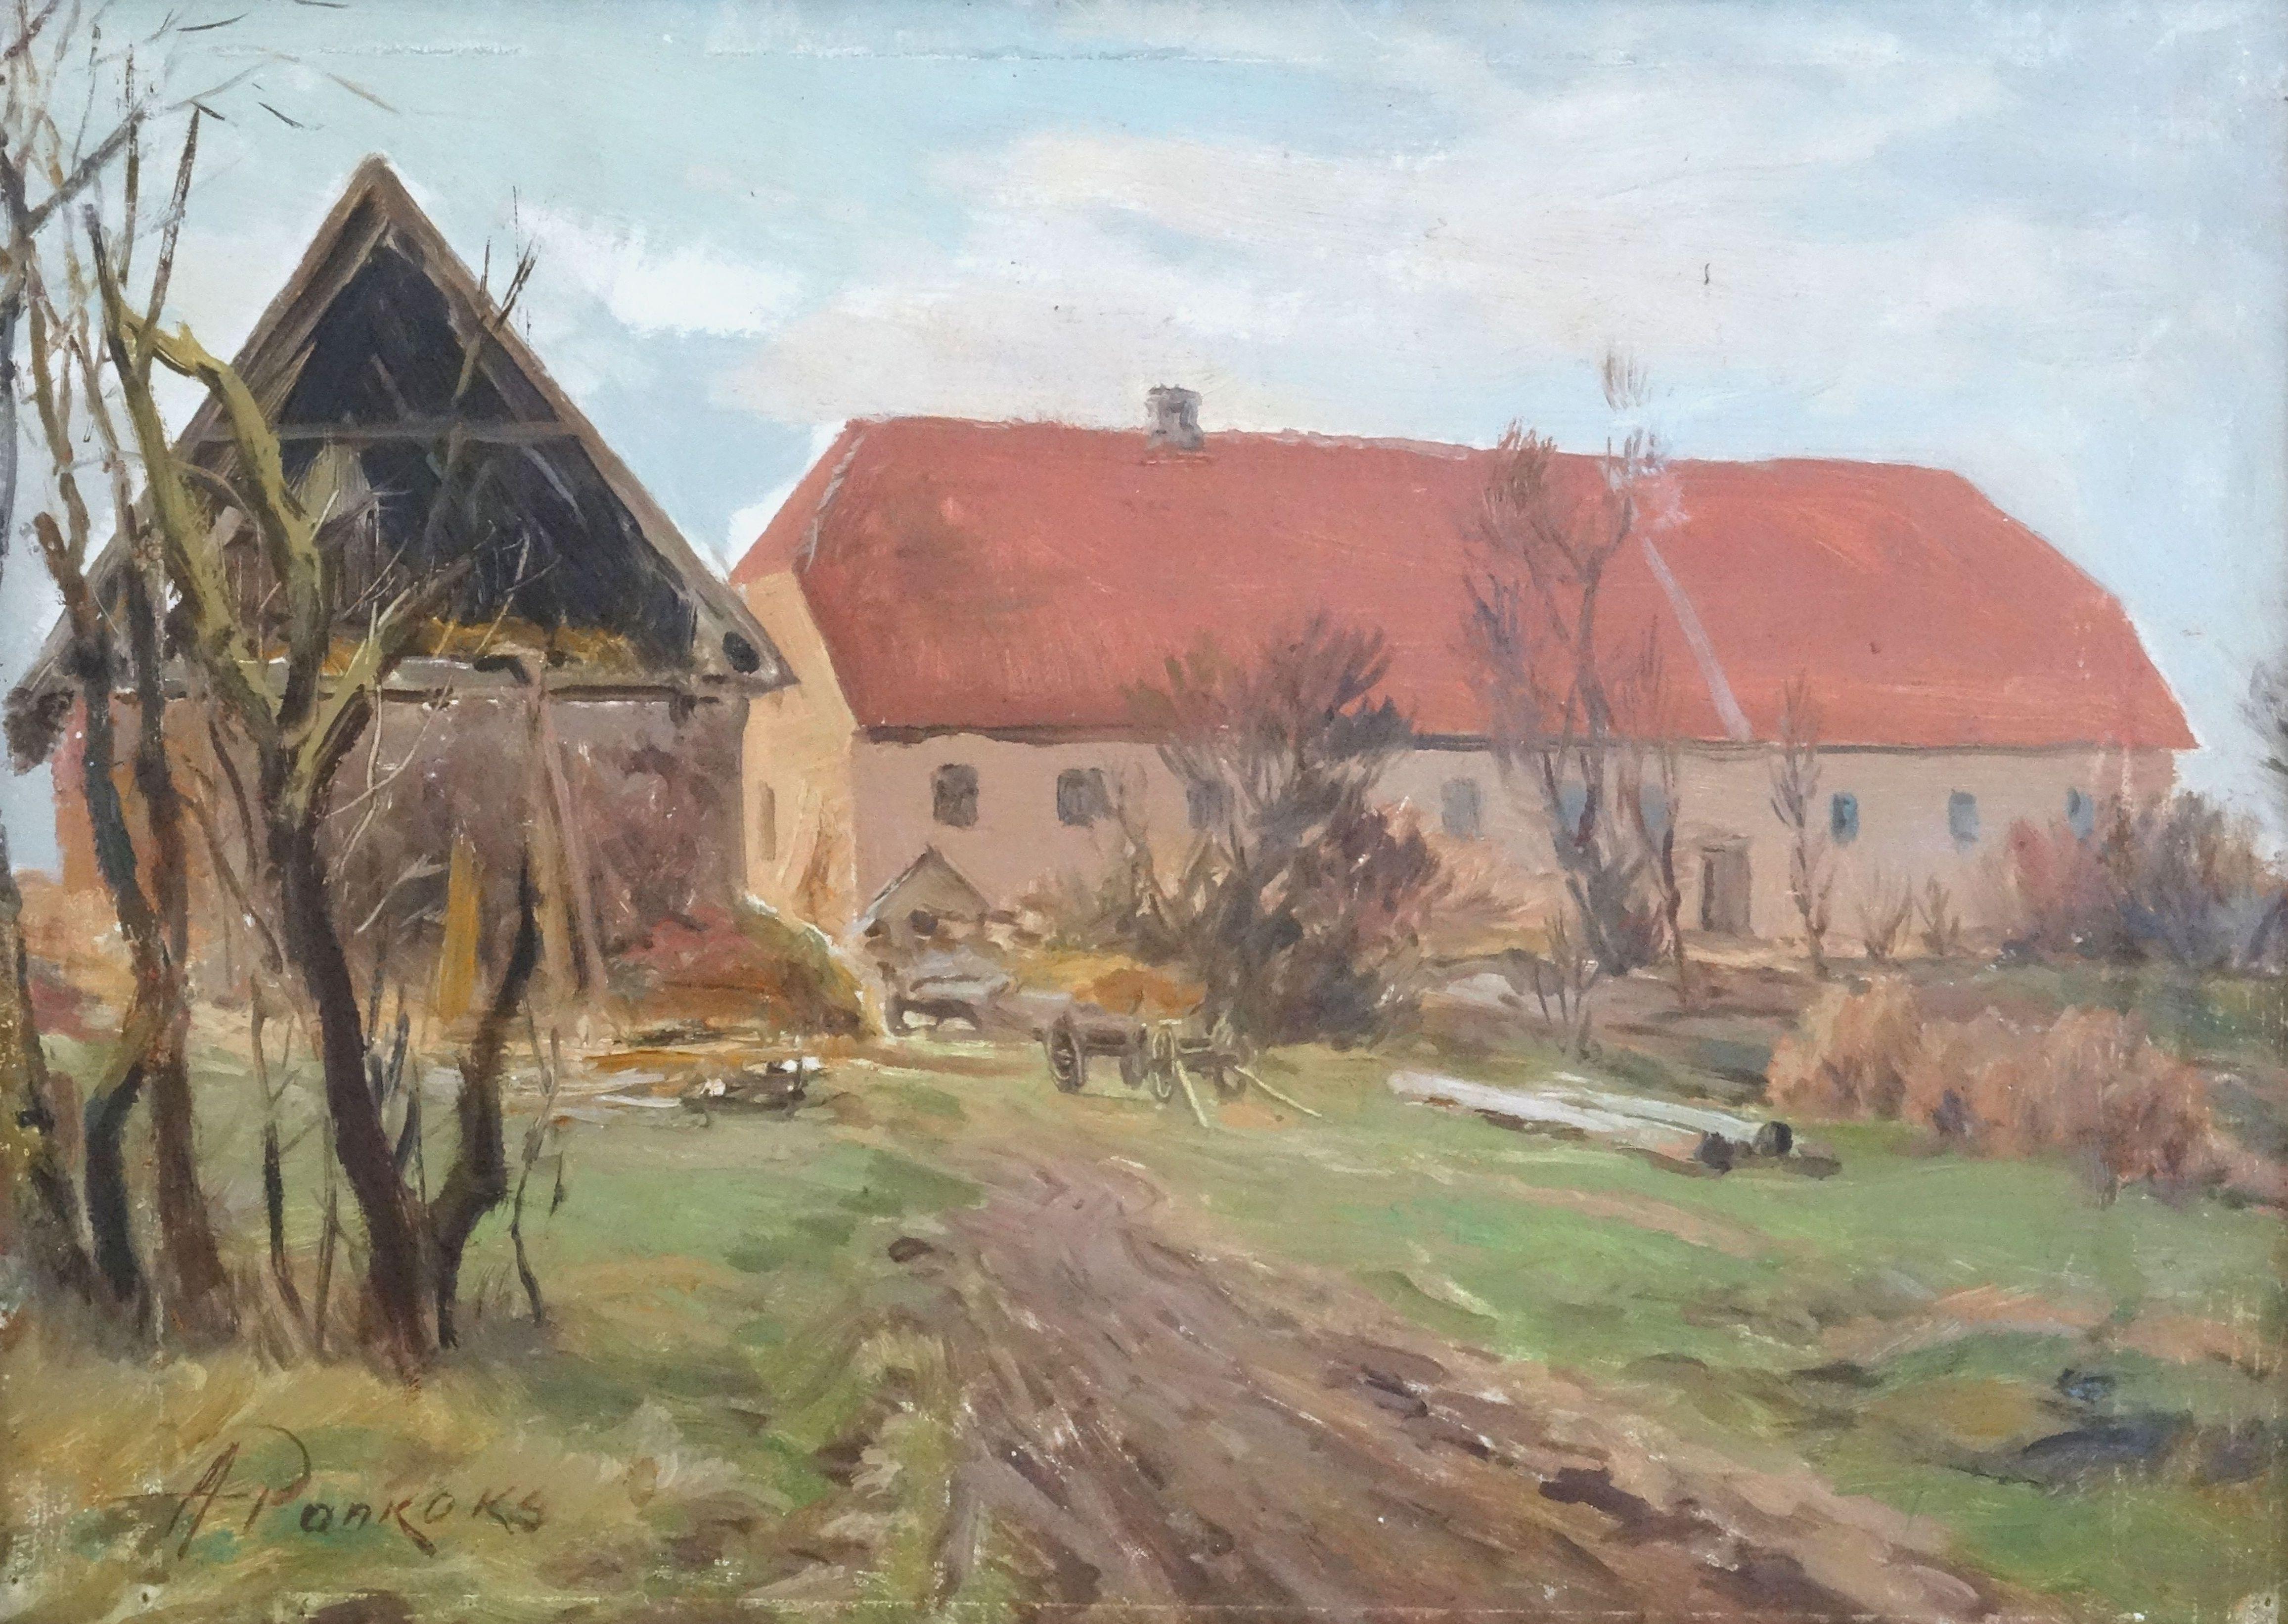 Arnolds Pankoks Landscape Painting - Yard. Oil on cardboard, 33x46.5 cm